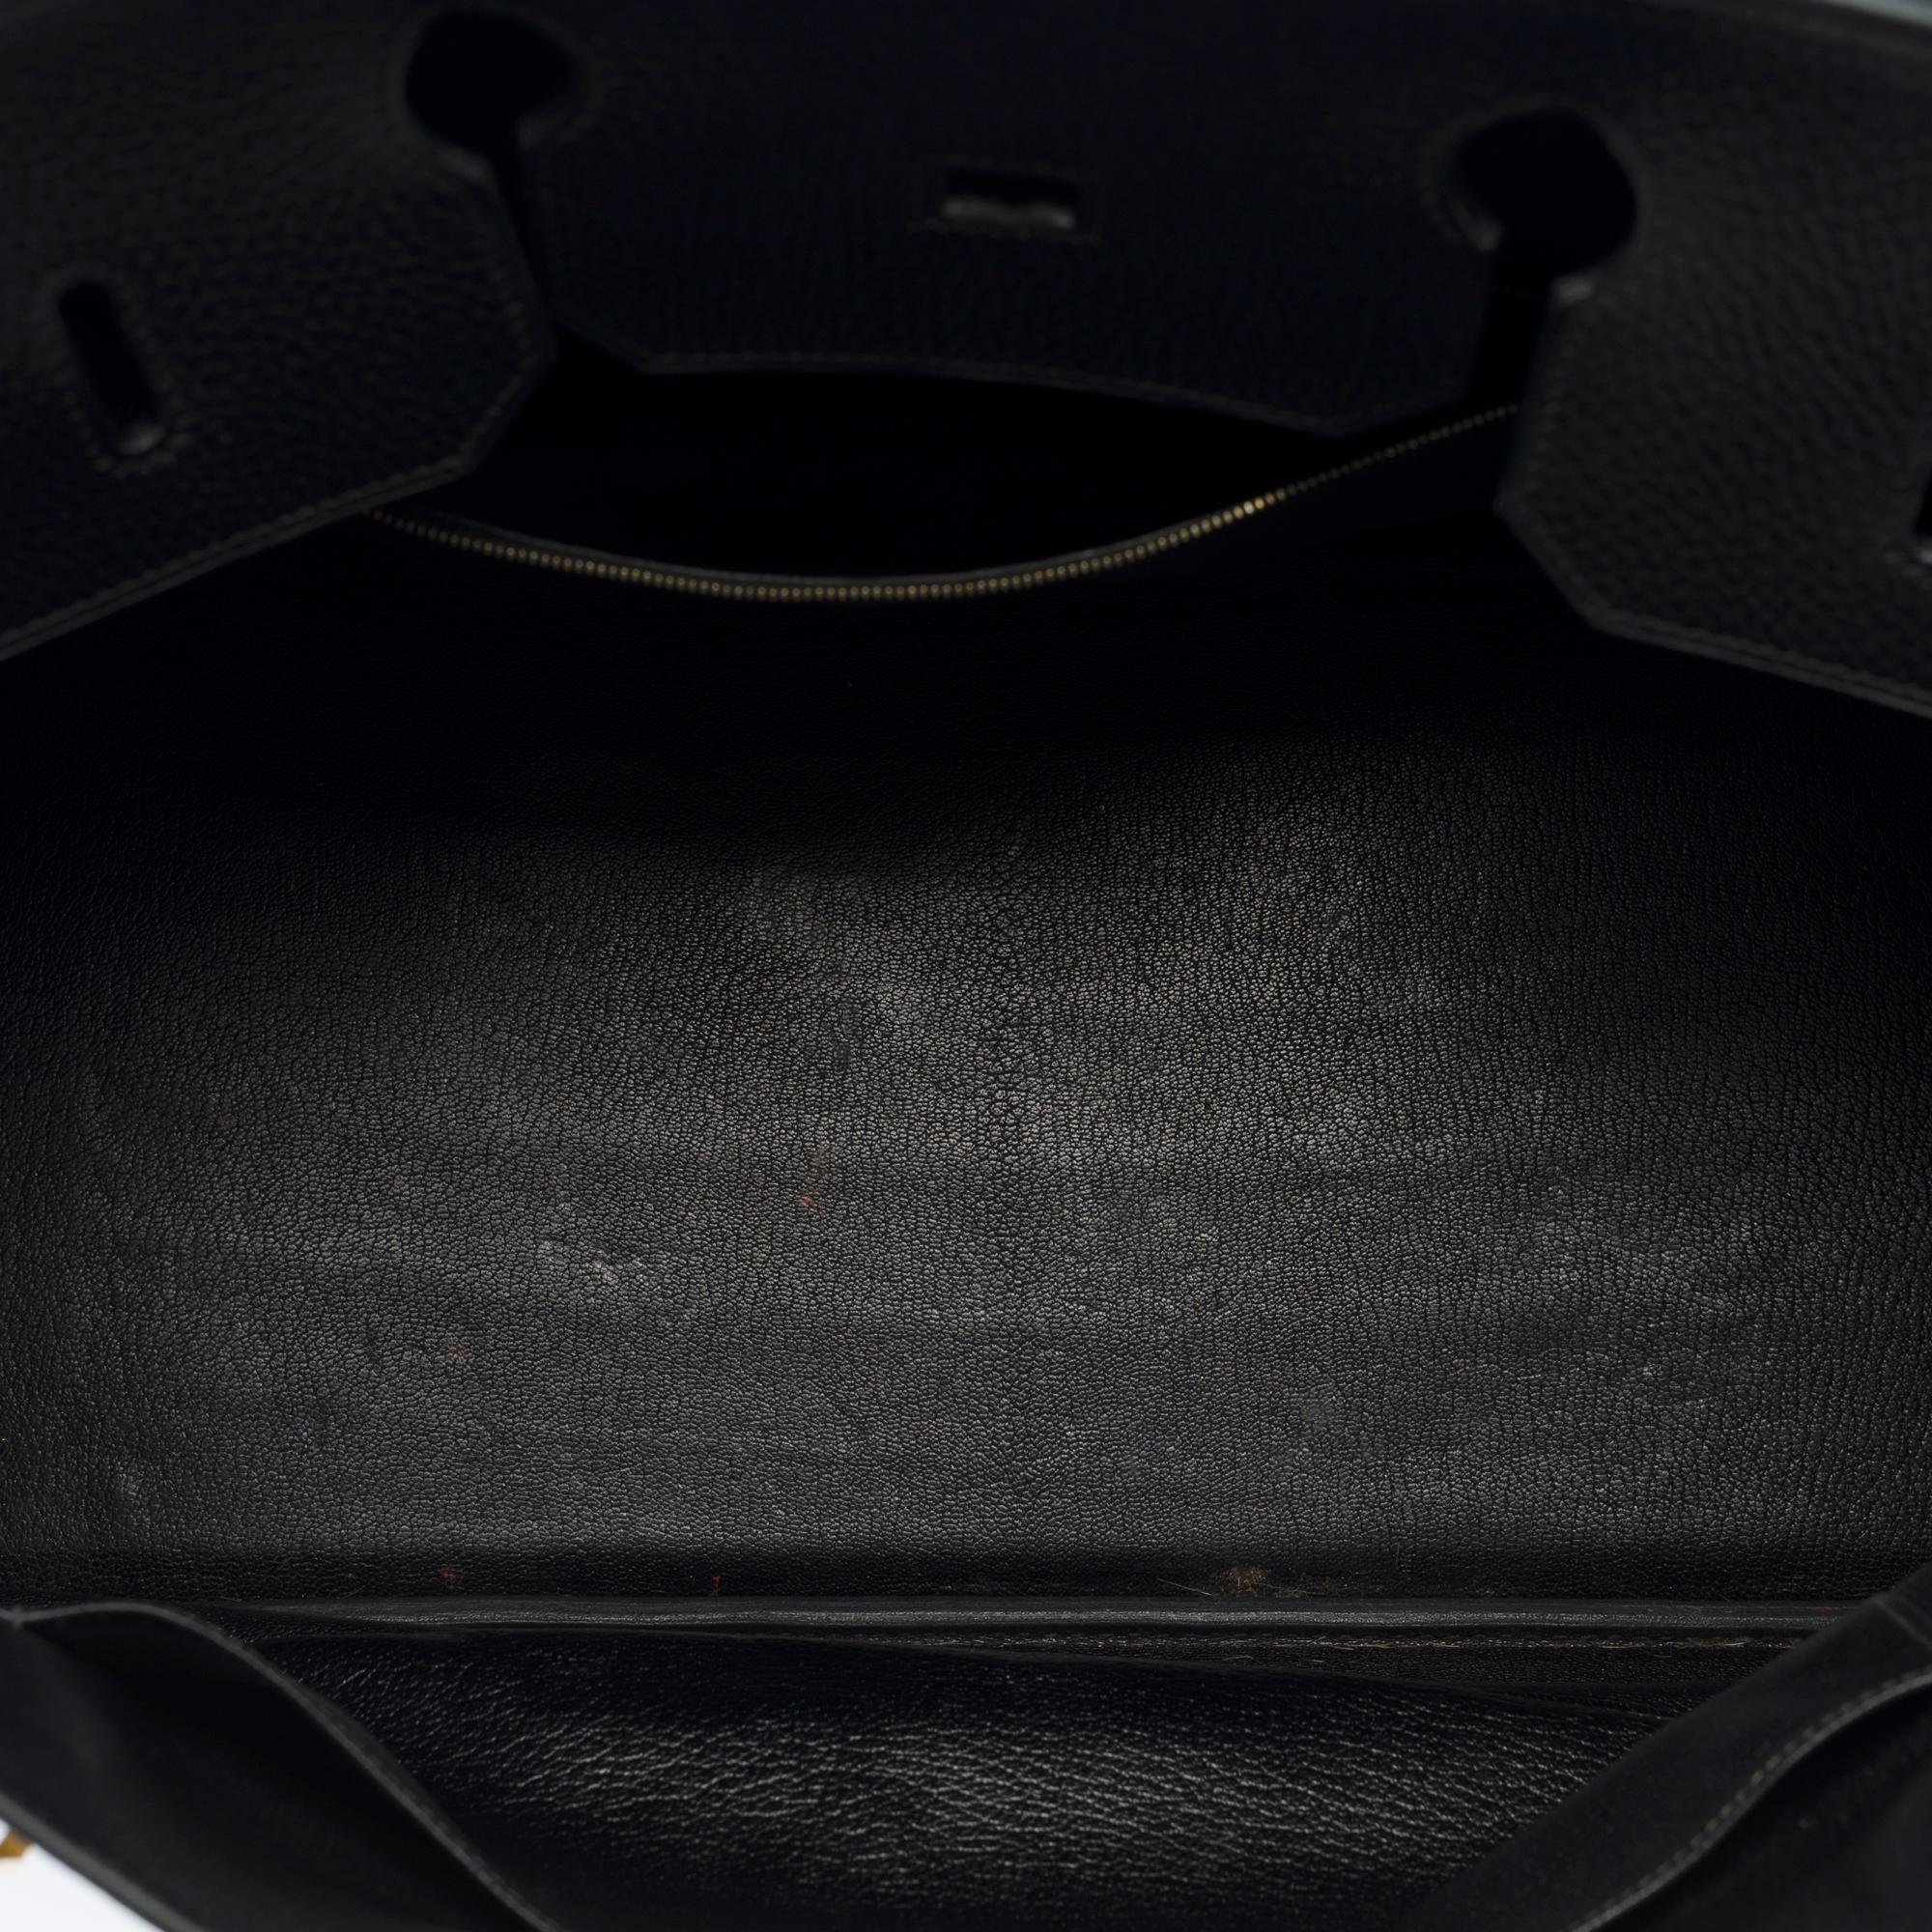 Classy Hermes Birkin 40cm handbag in Black Vache Ardennes Calf leather, GHW 3